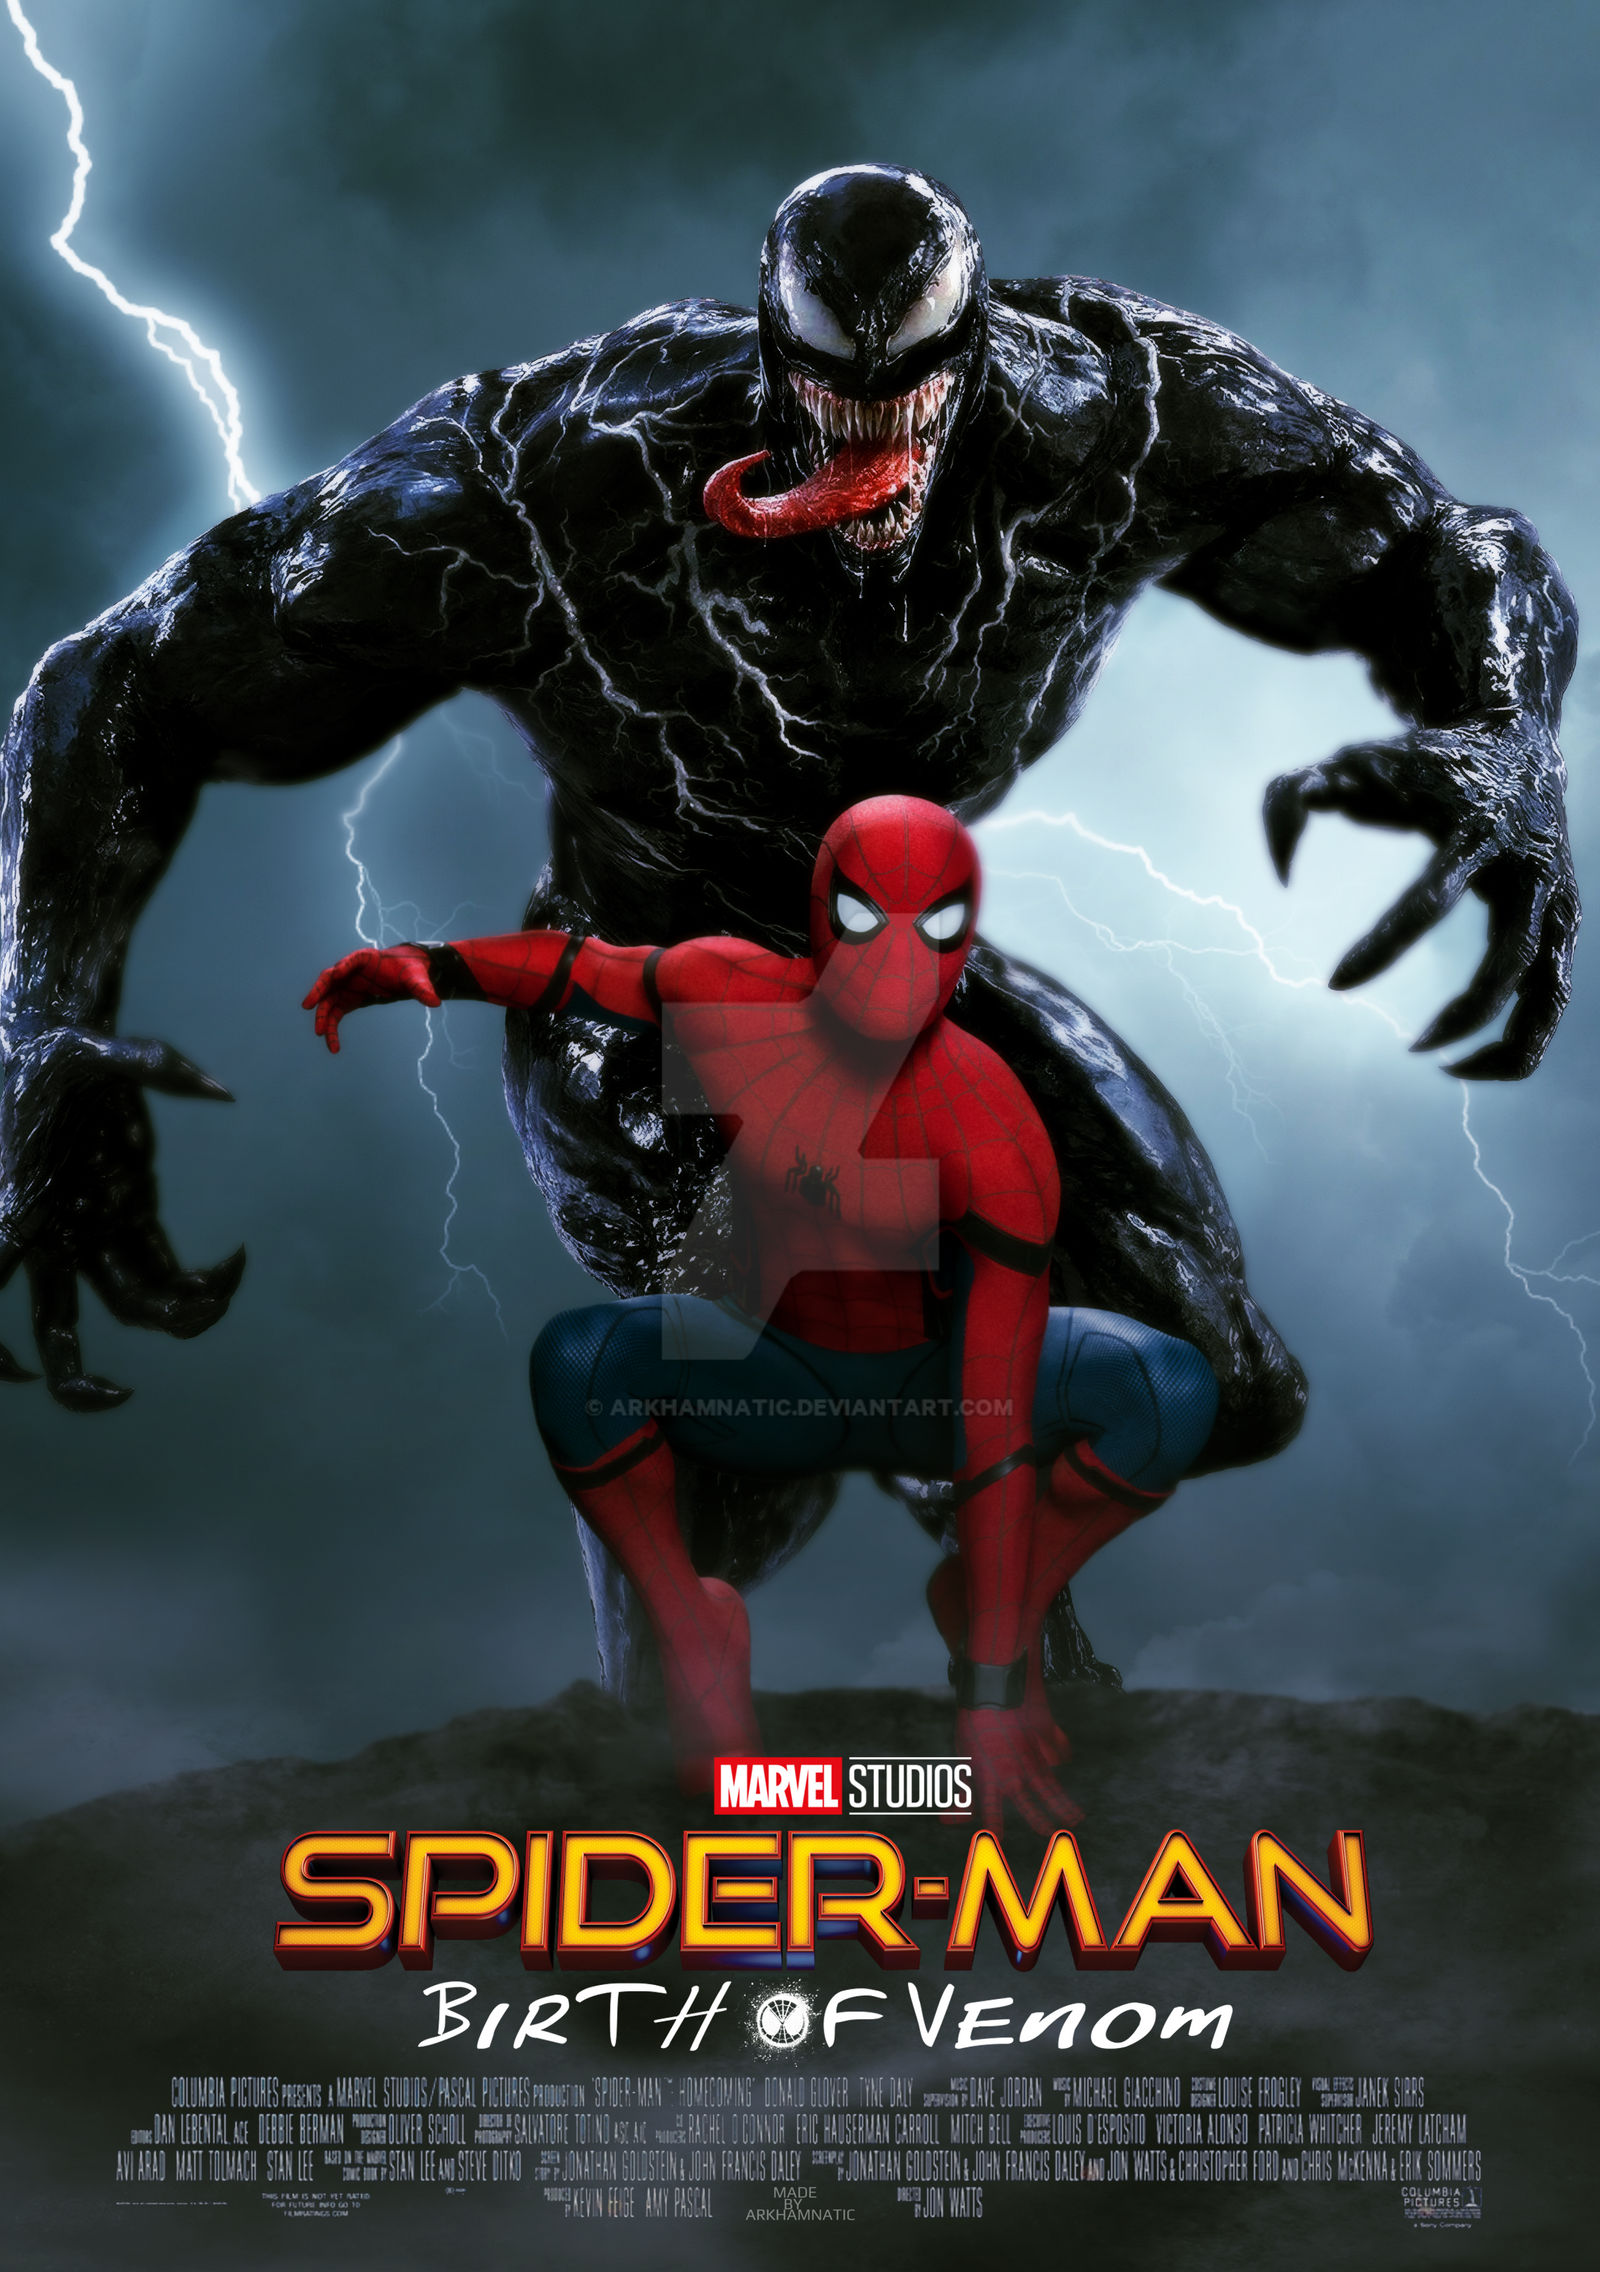 Spider-Man: Birth of Venom movie poster by ArkhamNatic on DeviantArt